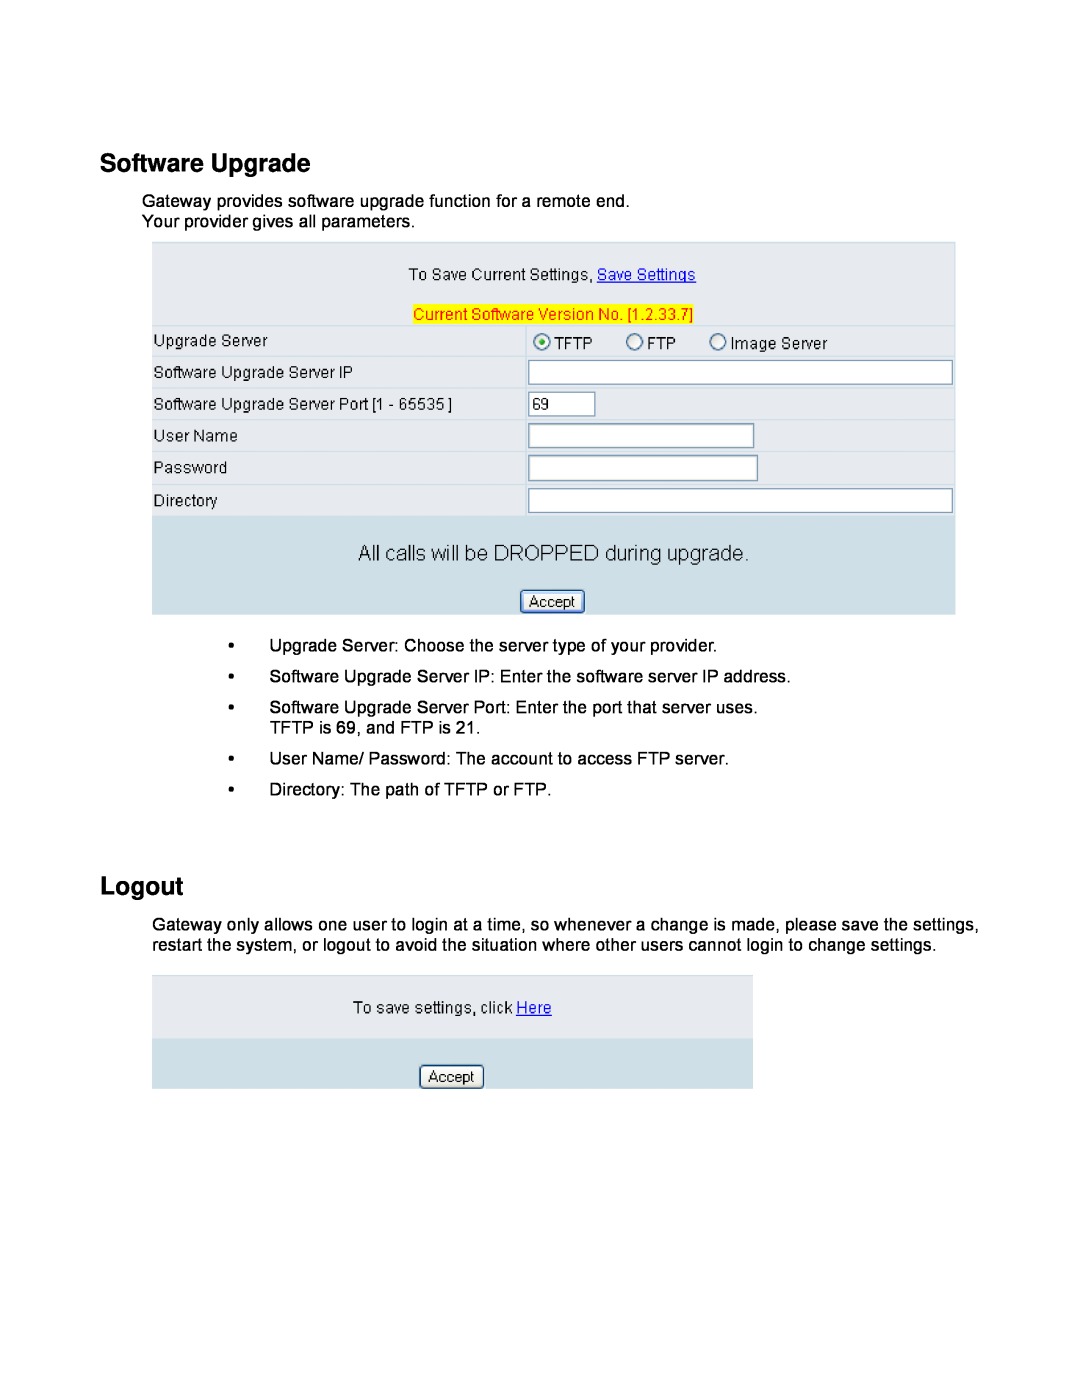 D-Link DVG-2032S user manual Software Upgrade, Logout 